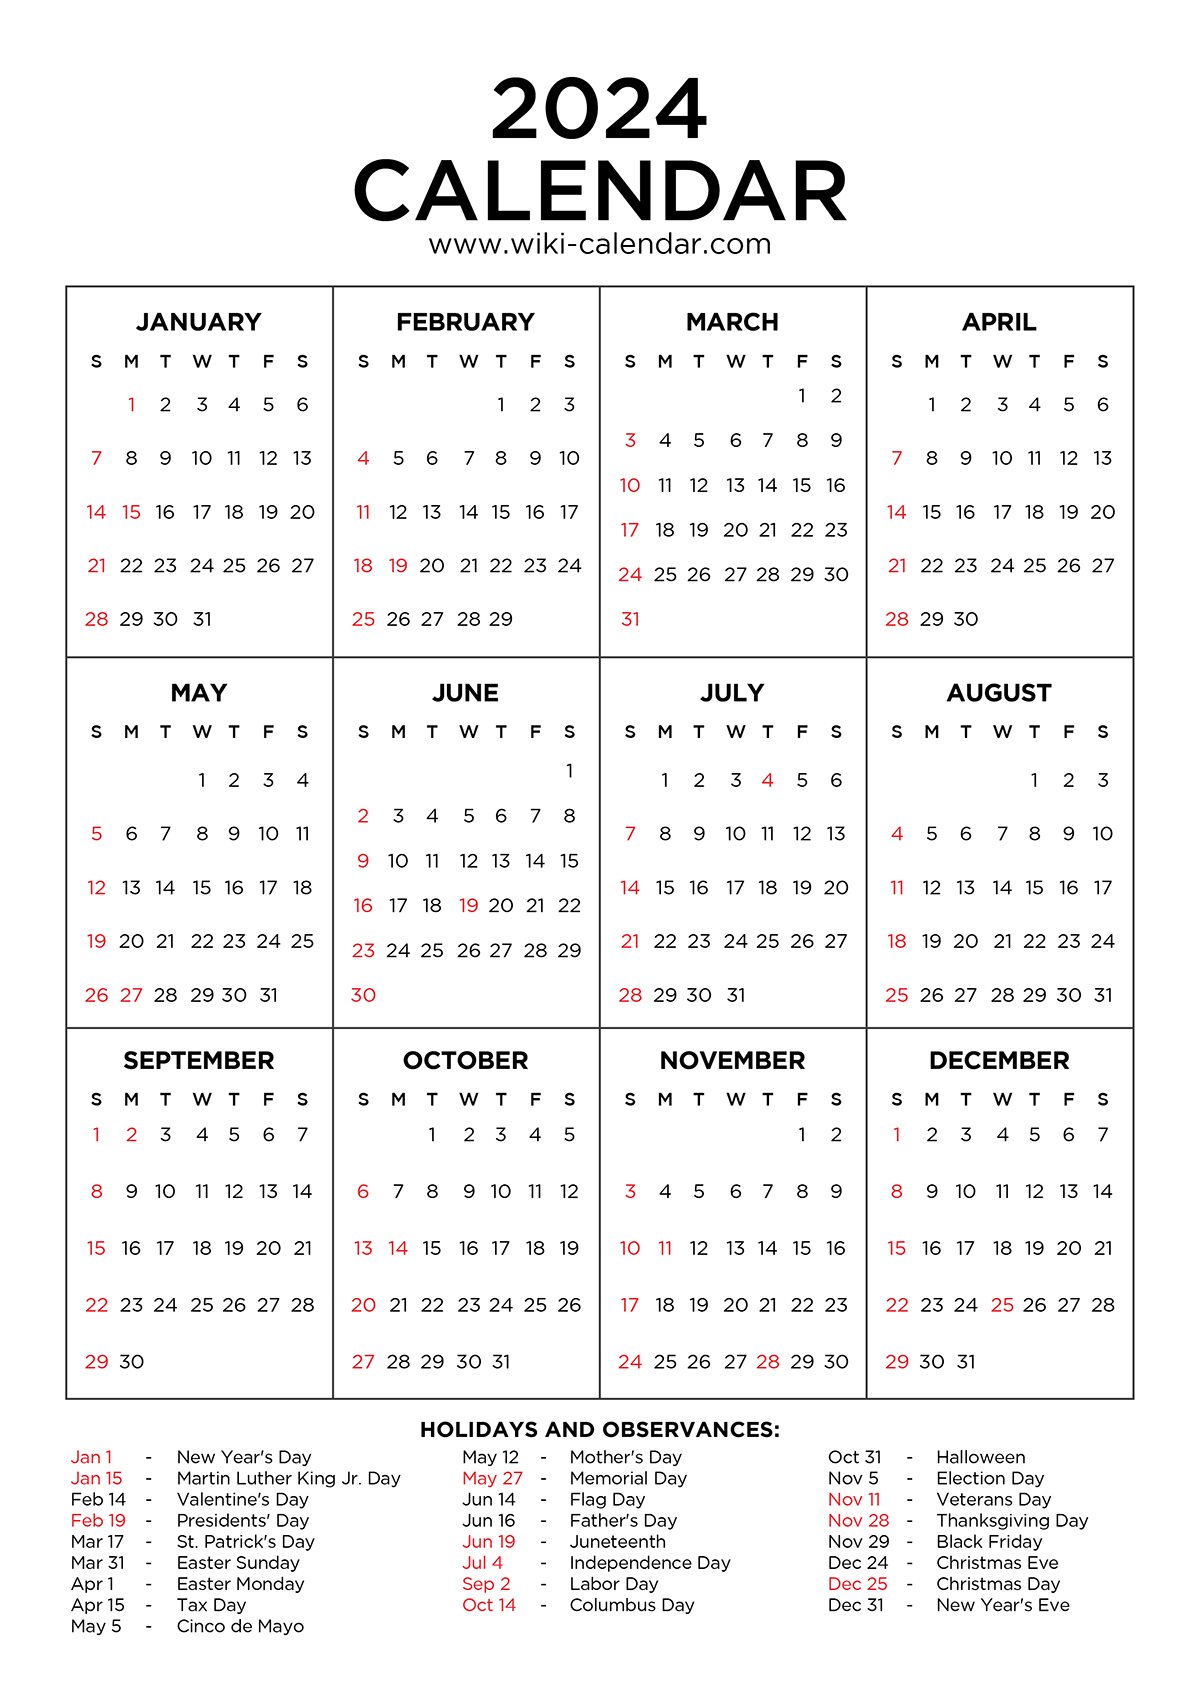 Free Printable Calendar 2024 With Us Holidays dreddy zorana